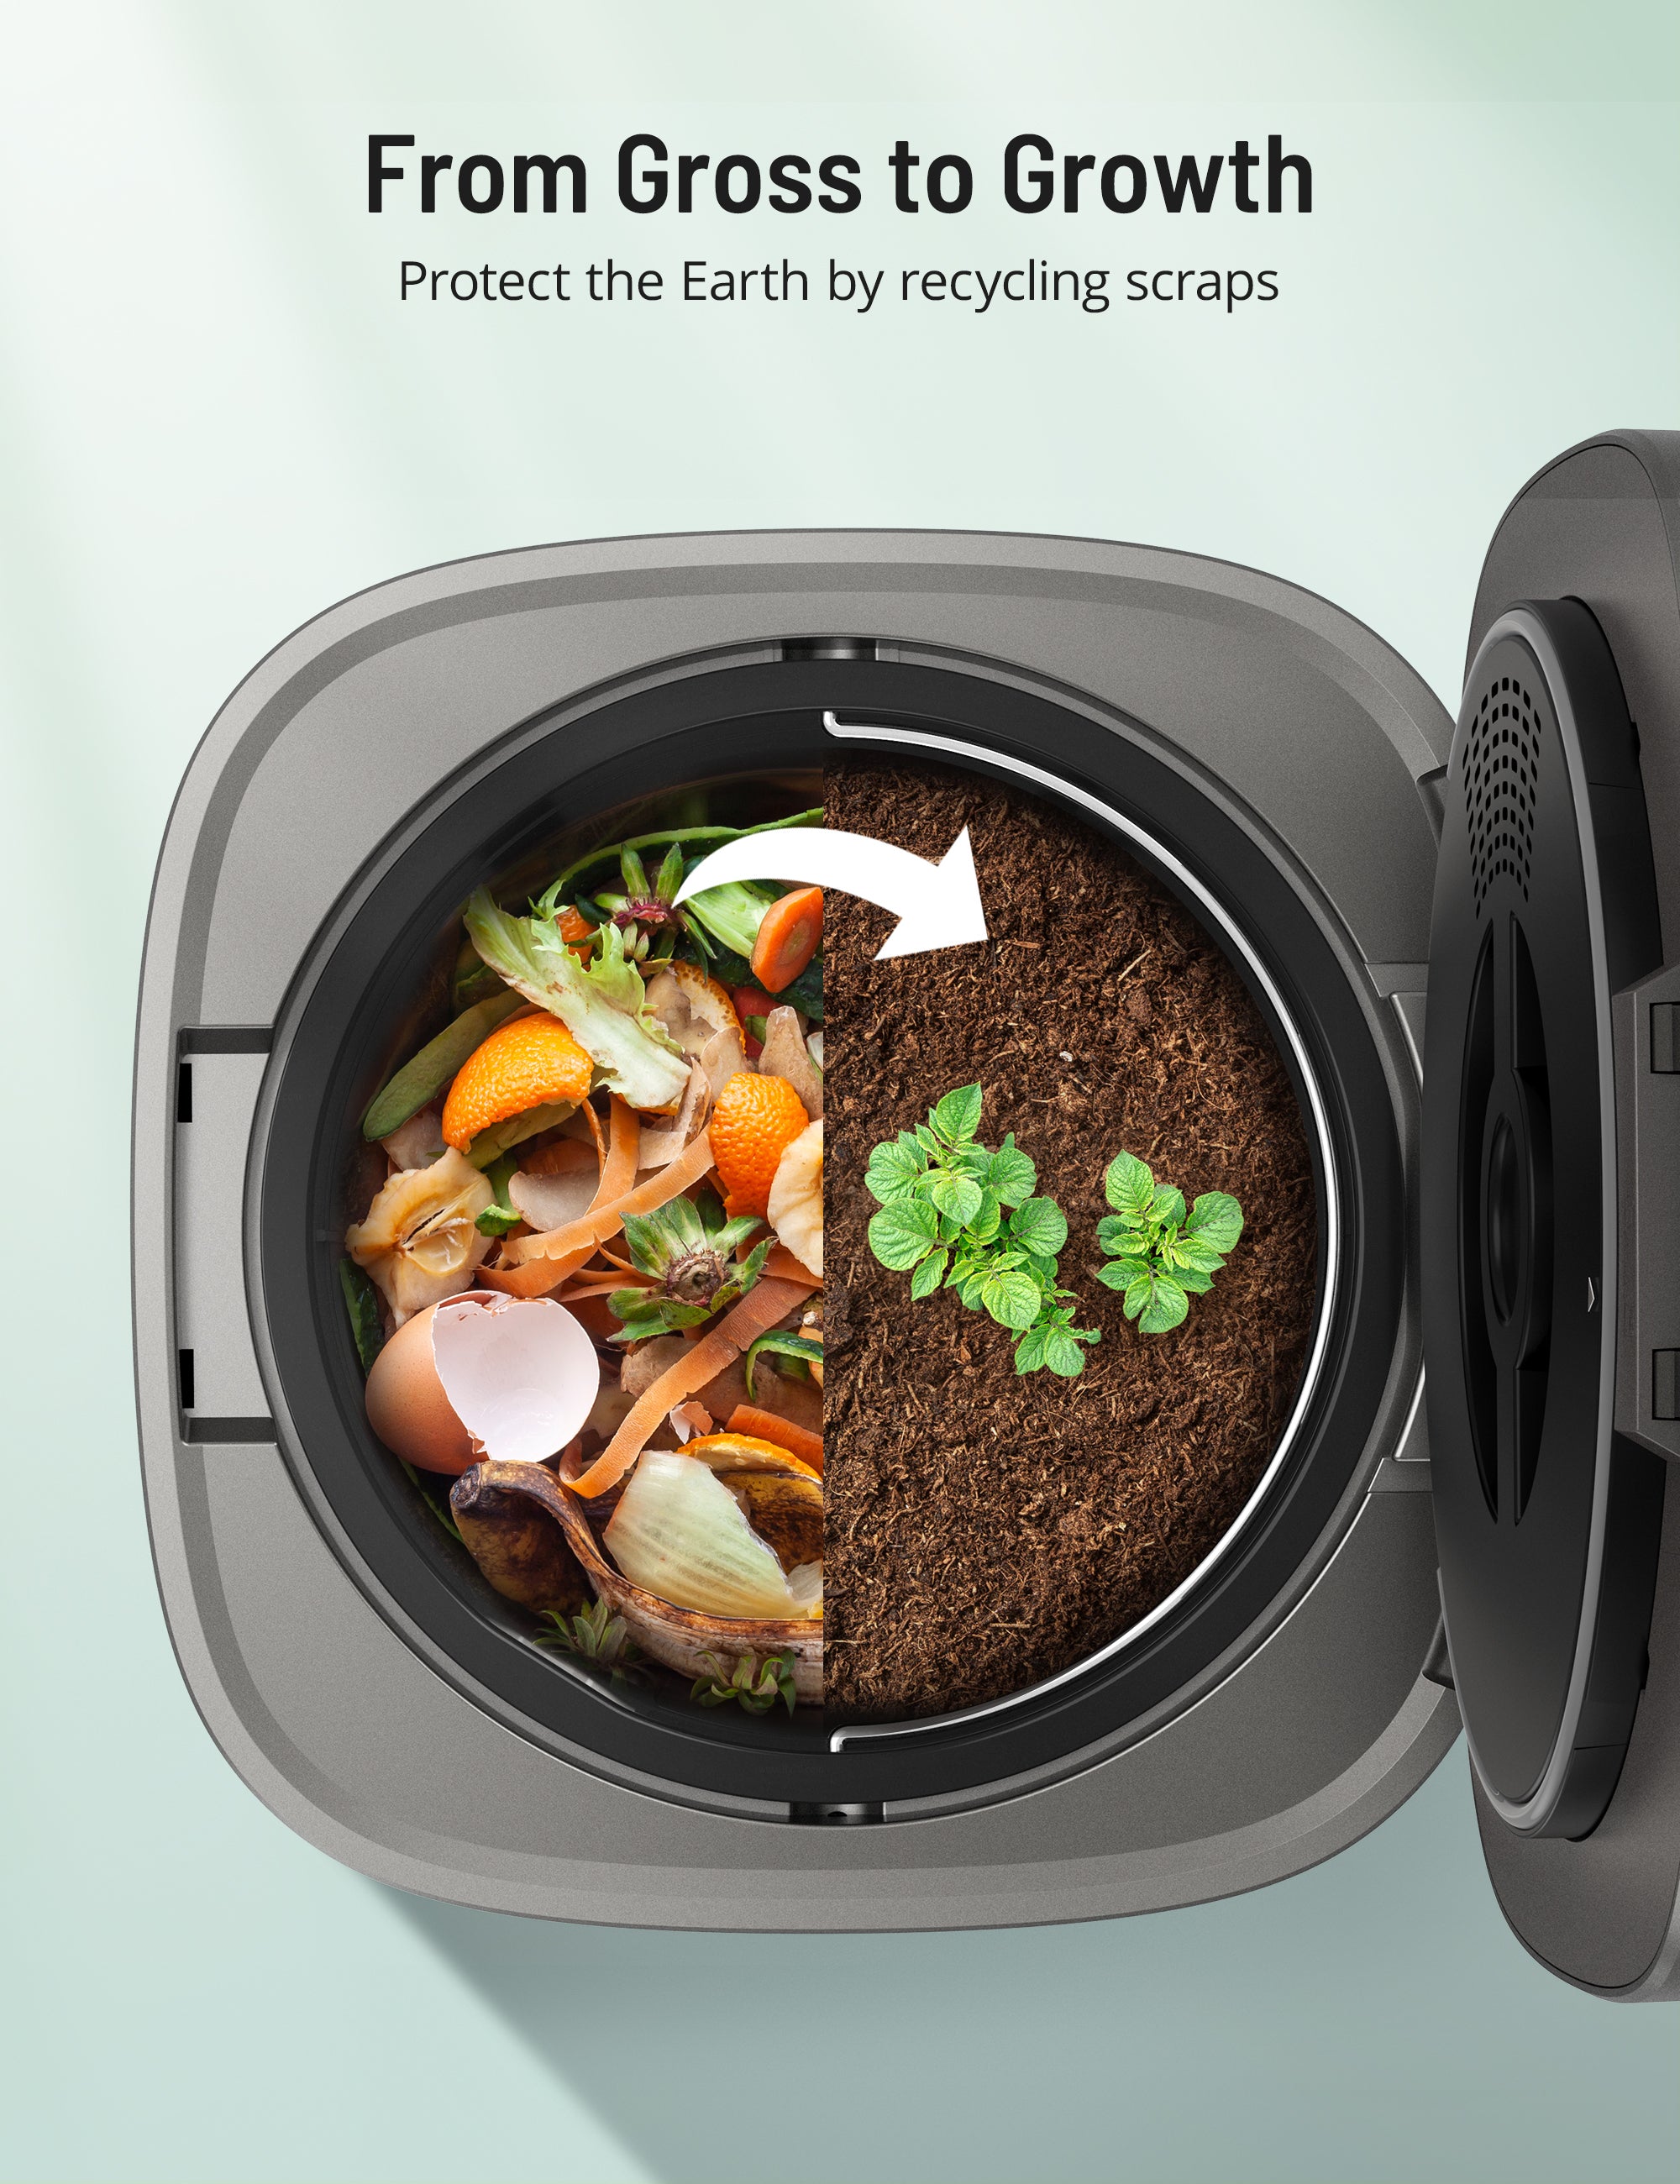 Paris Rhône Electric Countertop Composter, Kitchen Compost Bin, No Odor and Auto Stop